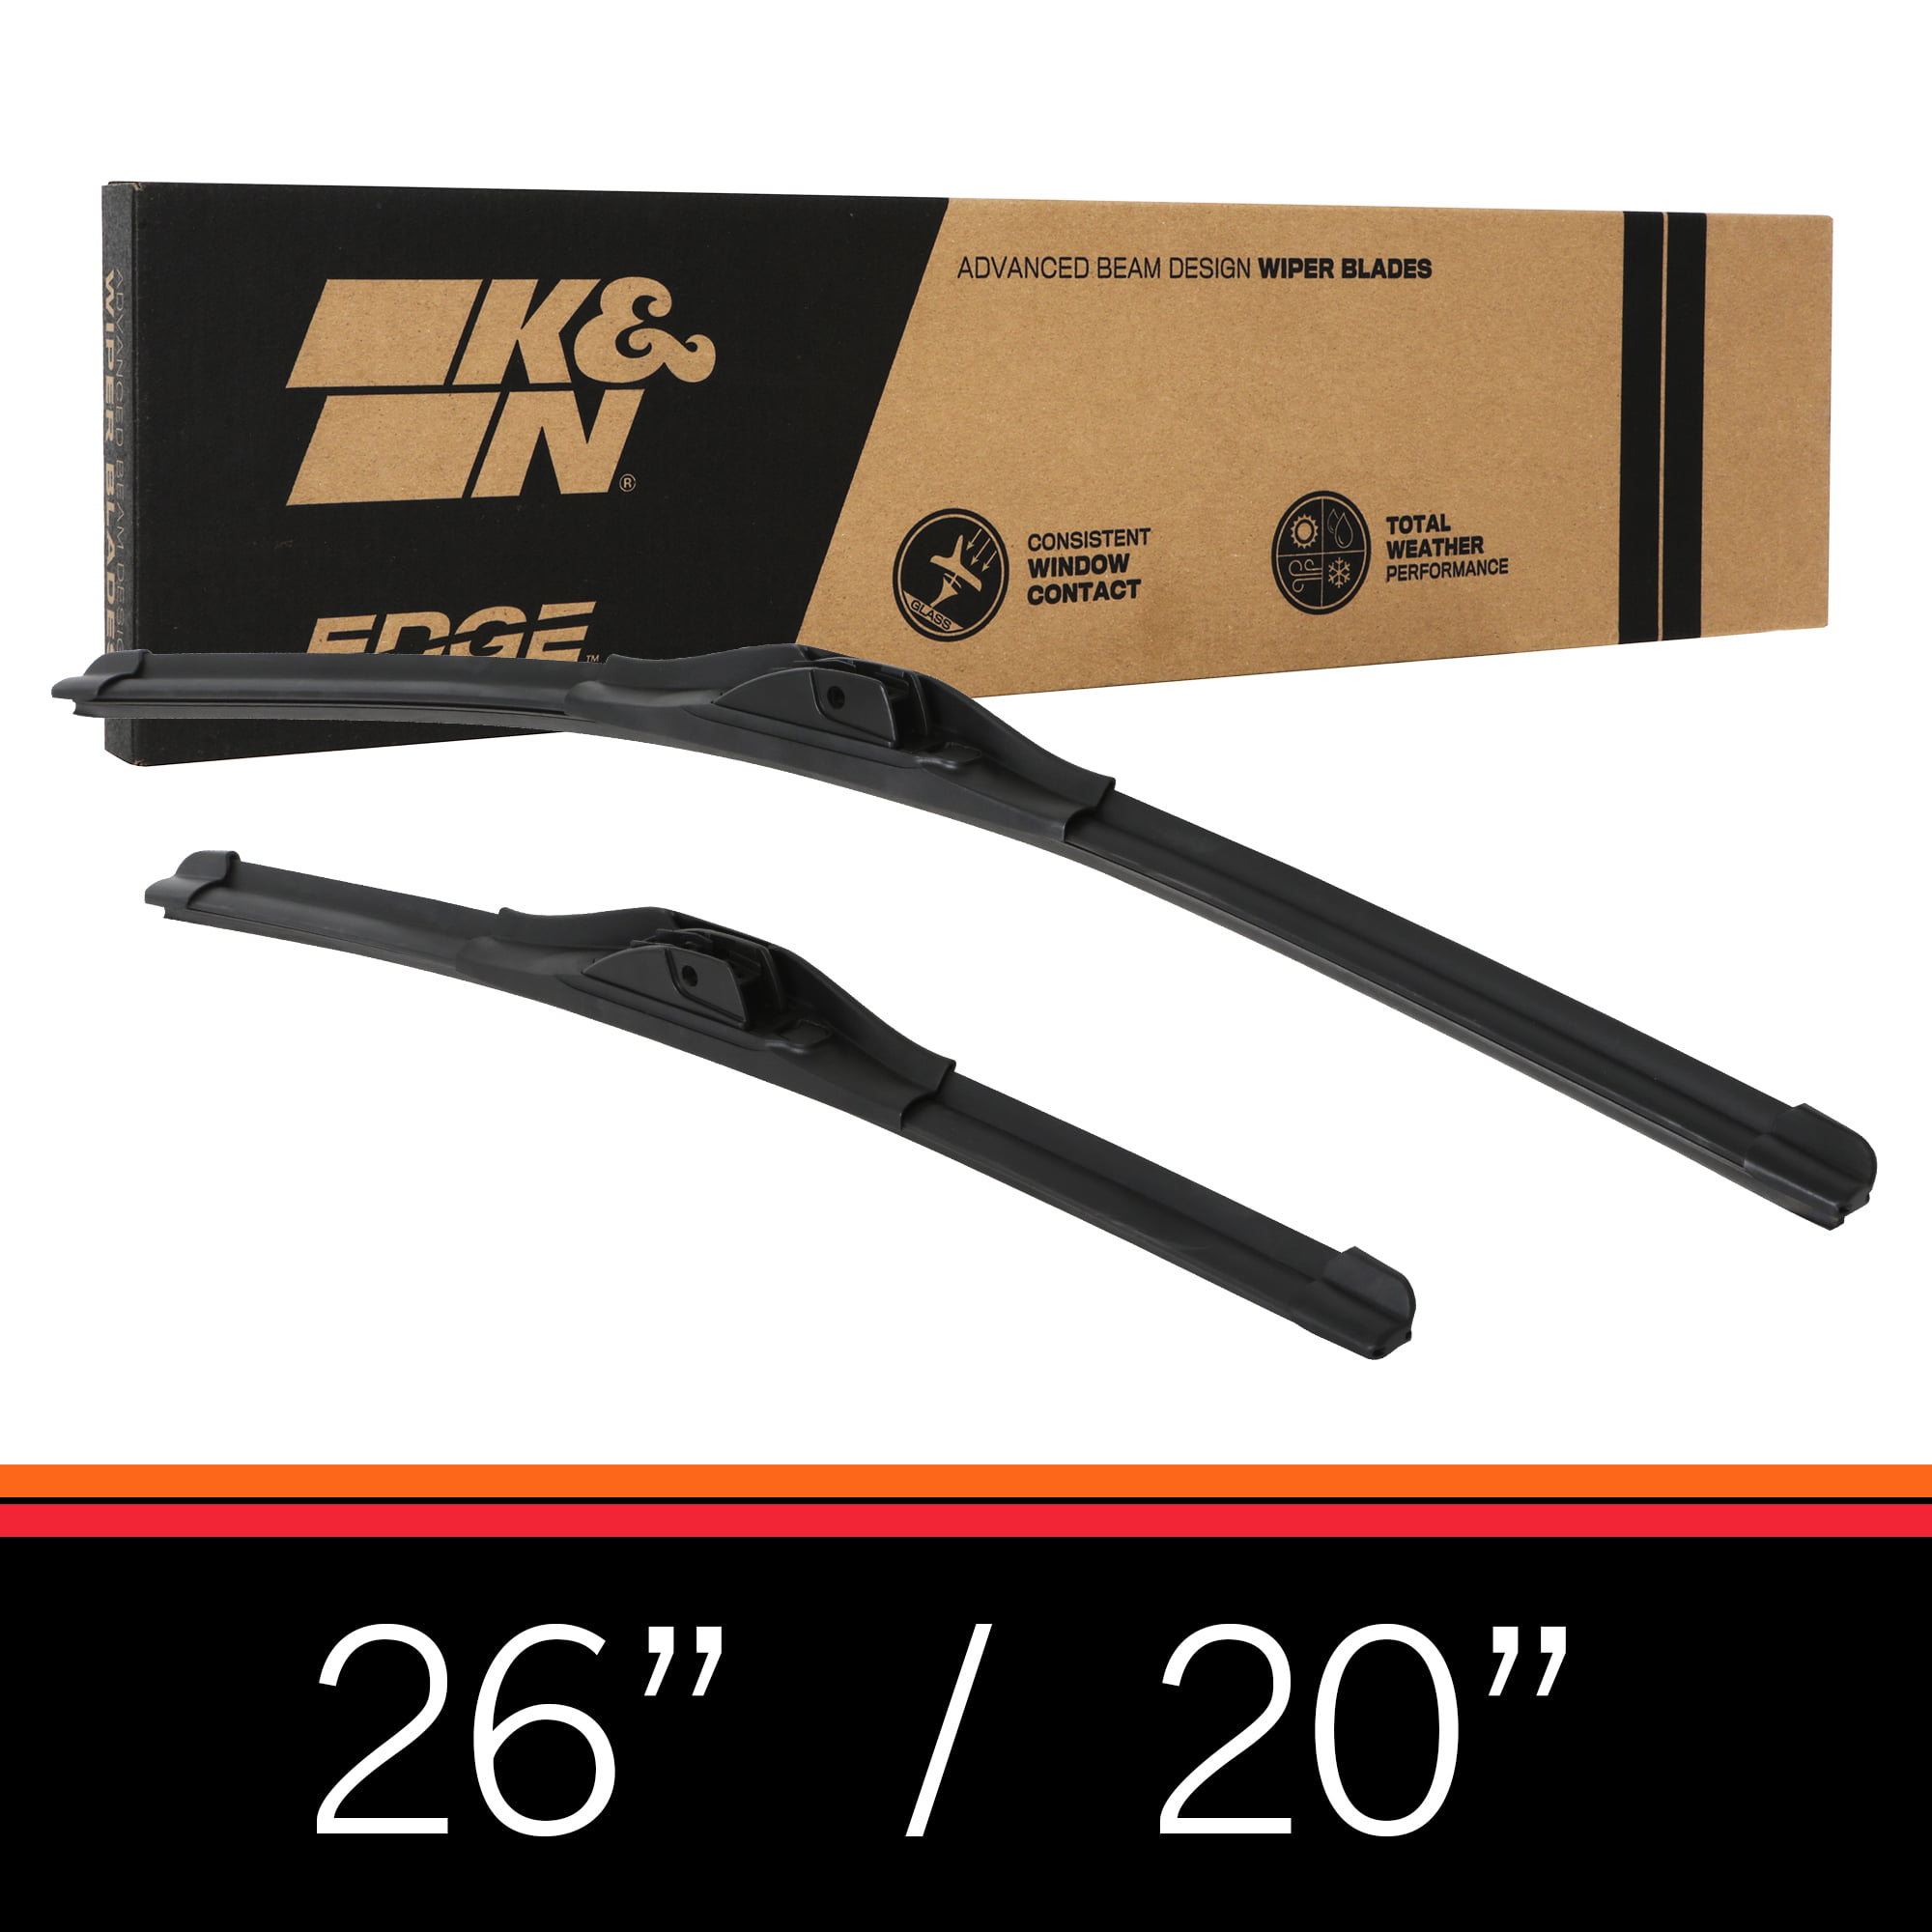 K&N EDGE All Weather Performance Wiper Blade 26"/20" (Pack of 2)